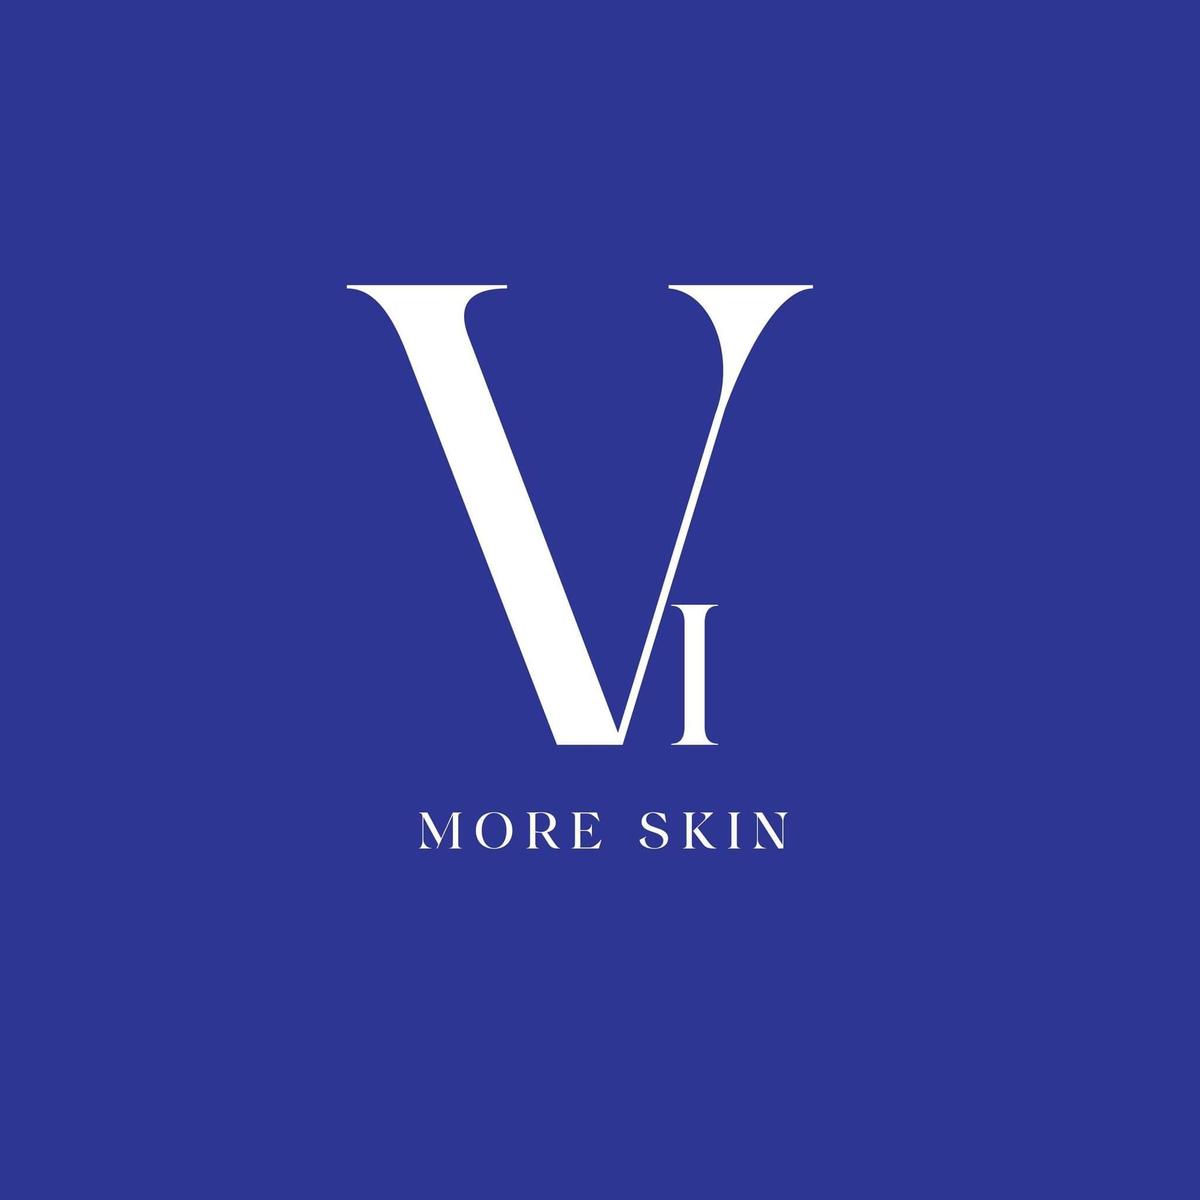 CEO ViMore Skin